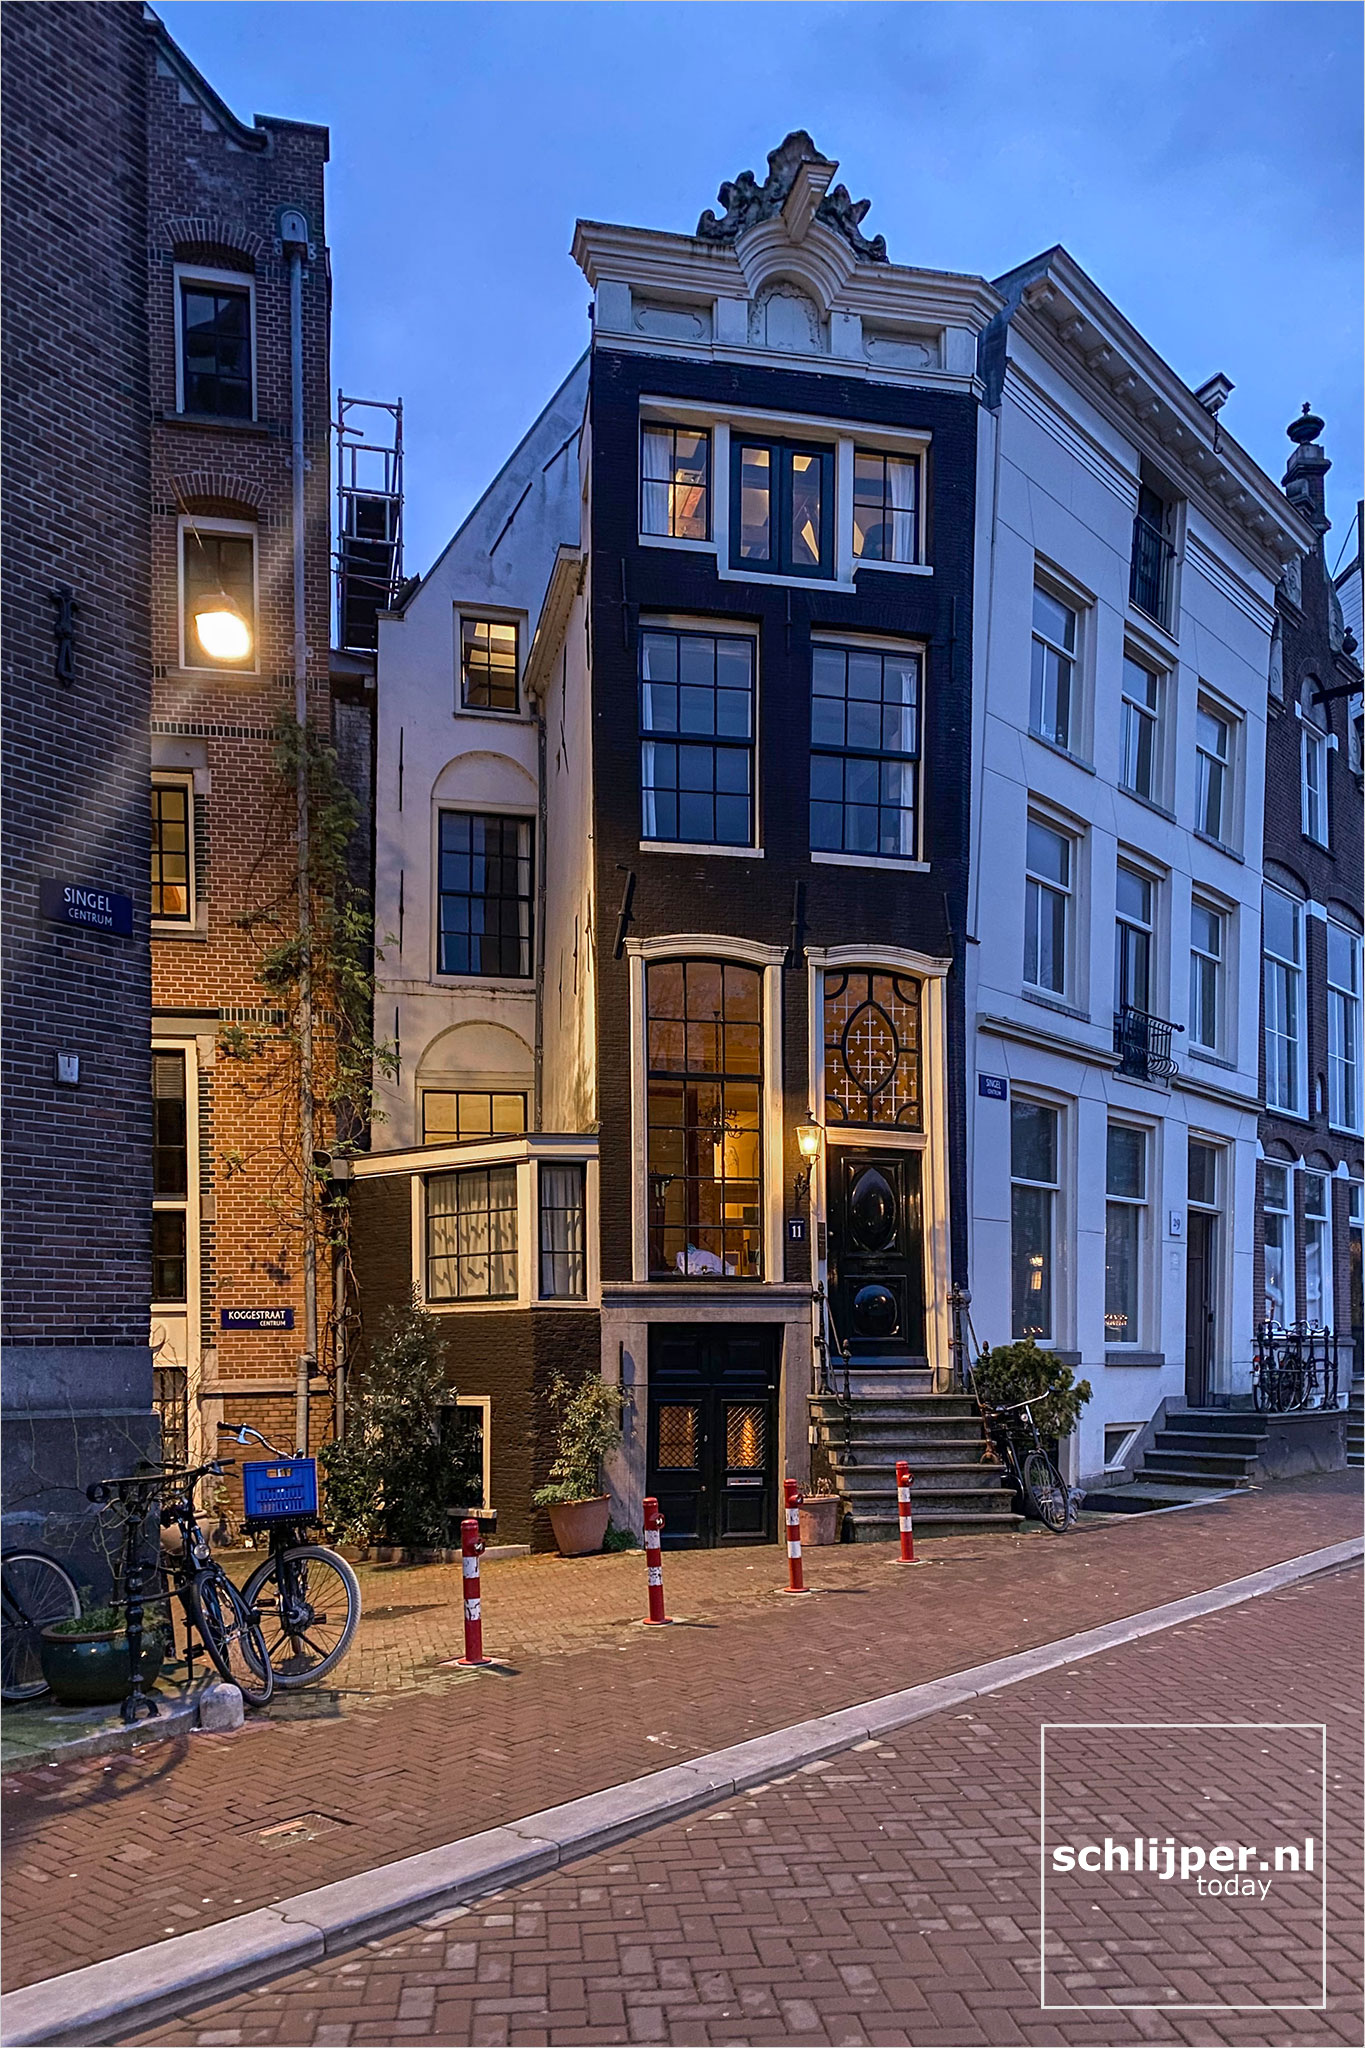 The Netherlands, Amsterdam, 11 januari 2021